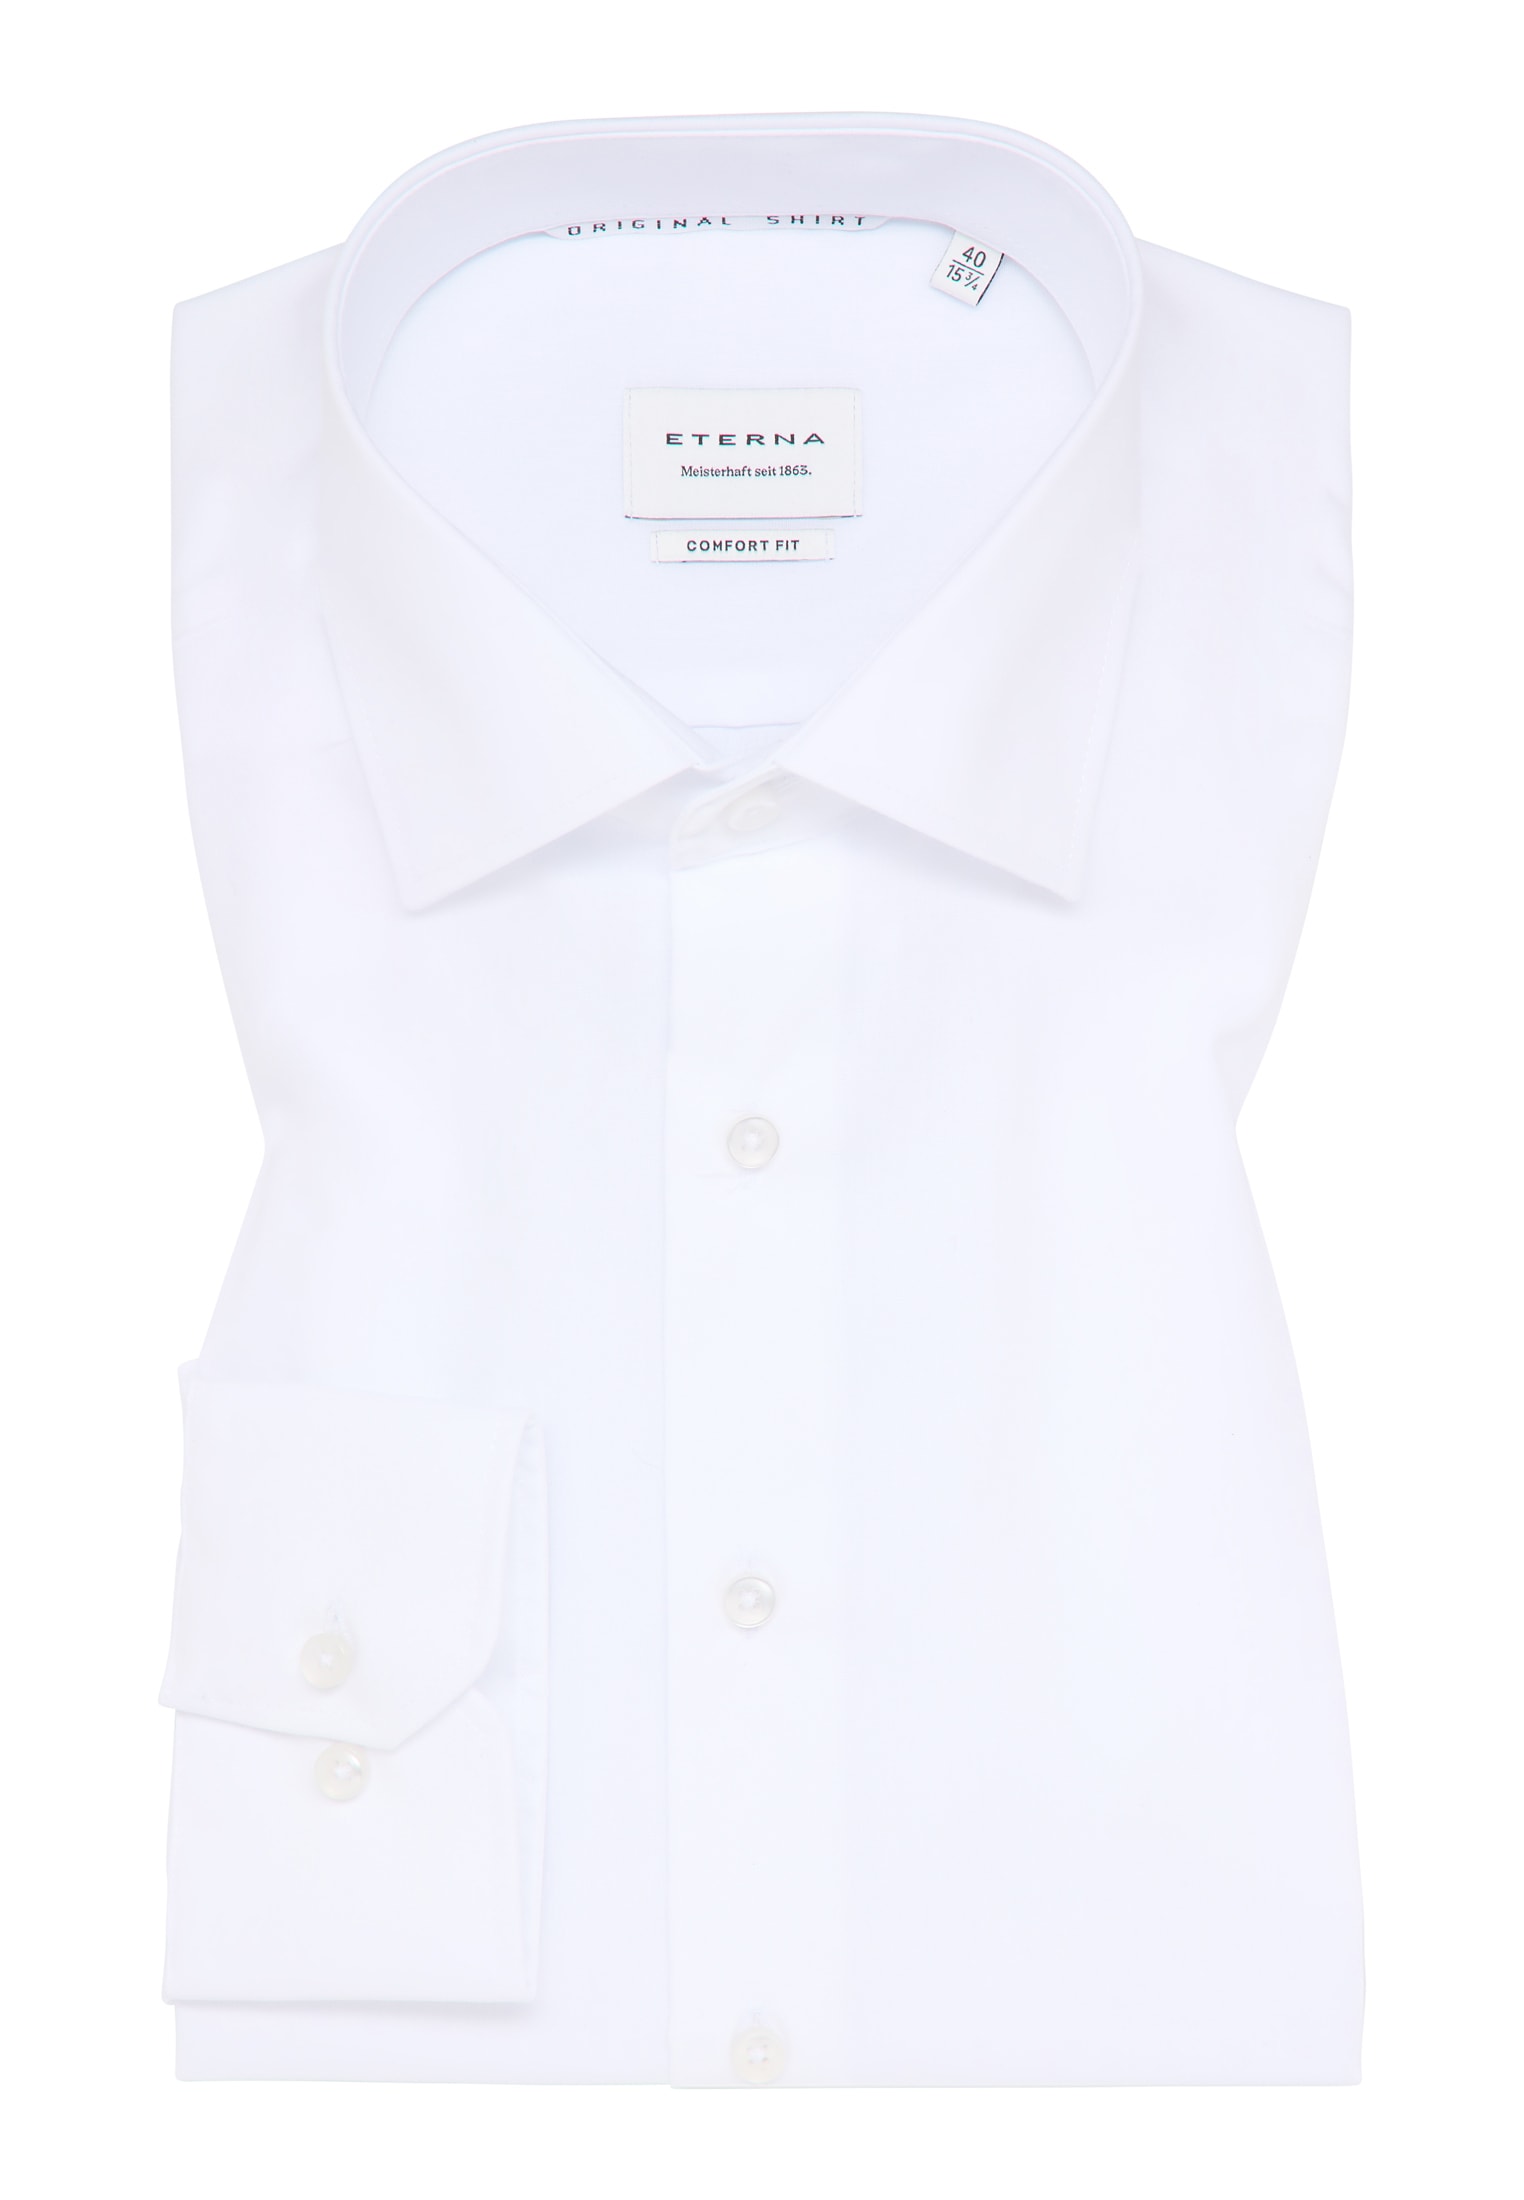 | | | Original weiß weiß Shirt 1SH12605-00-01-40-1/1 Langarm 40 unifarben | COMFORT in FIT